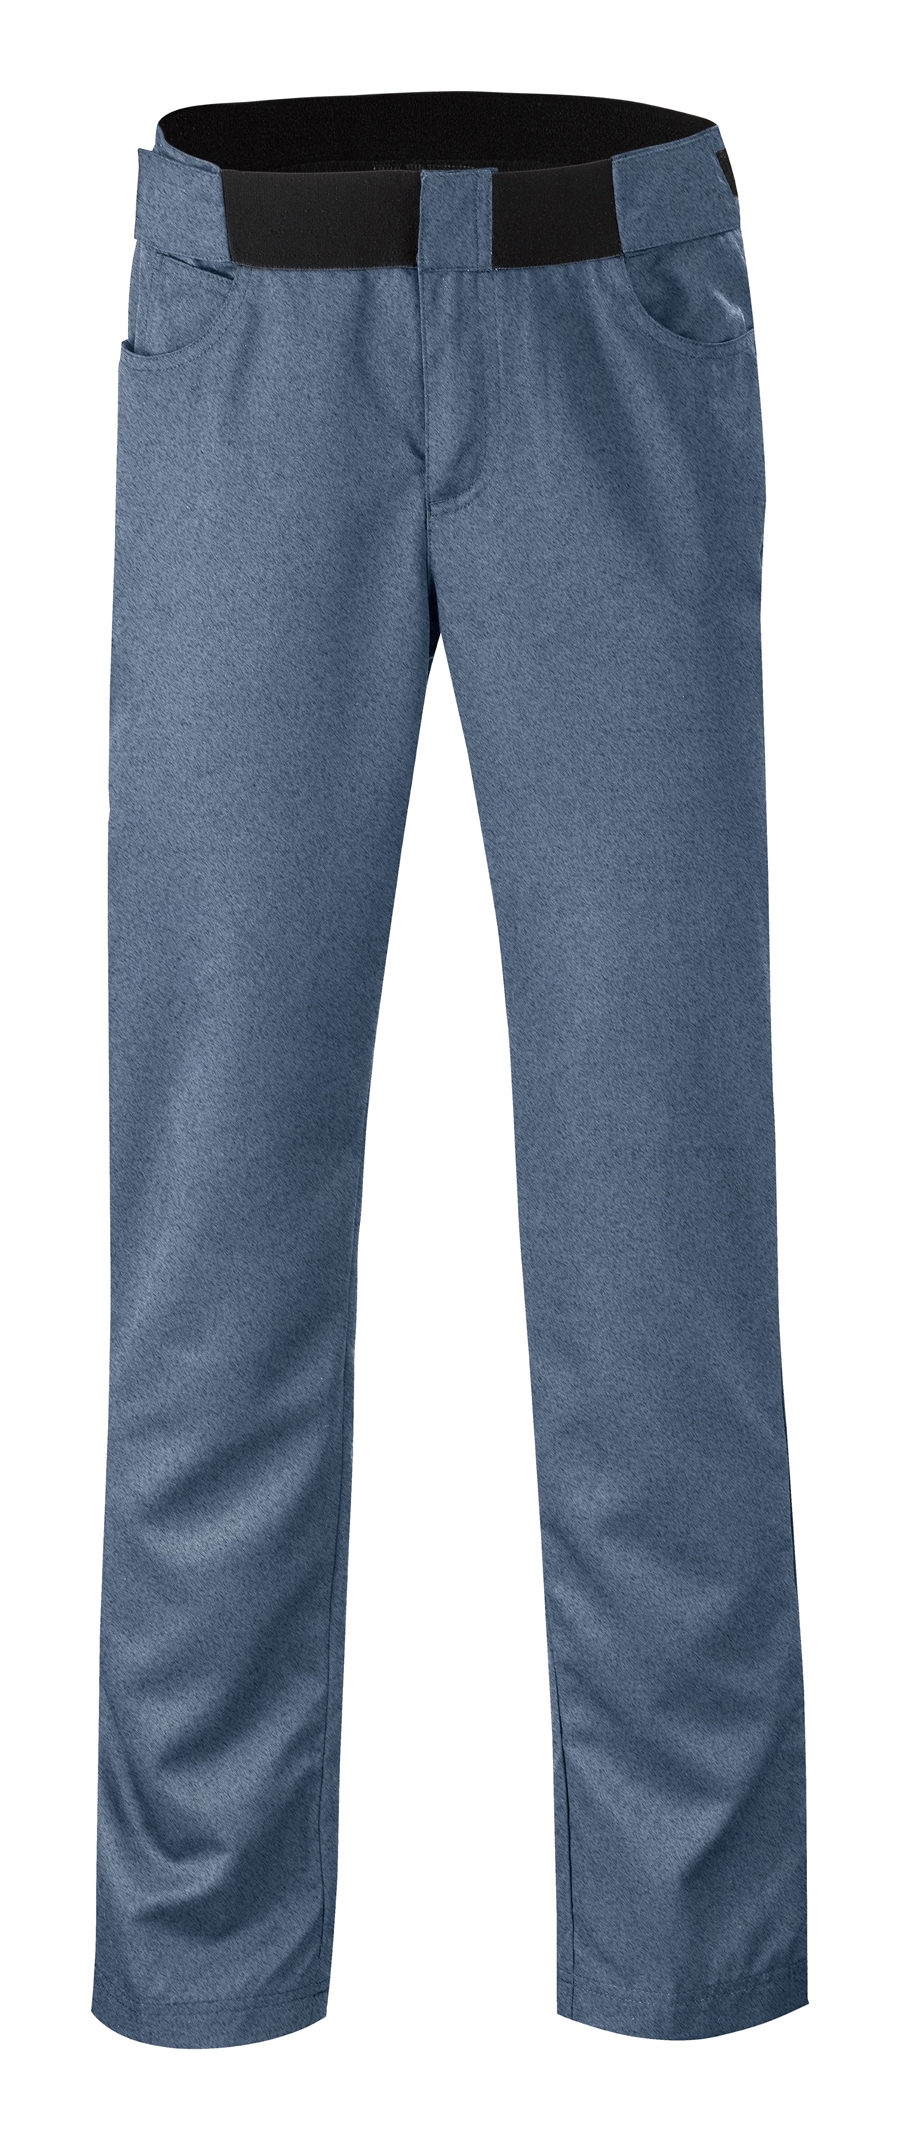 Fusion  pants denim look 50% Lyocell, 50% Polyester